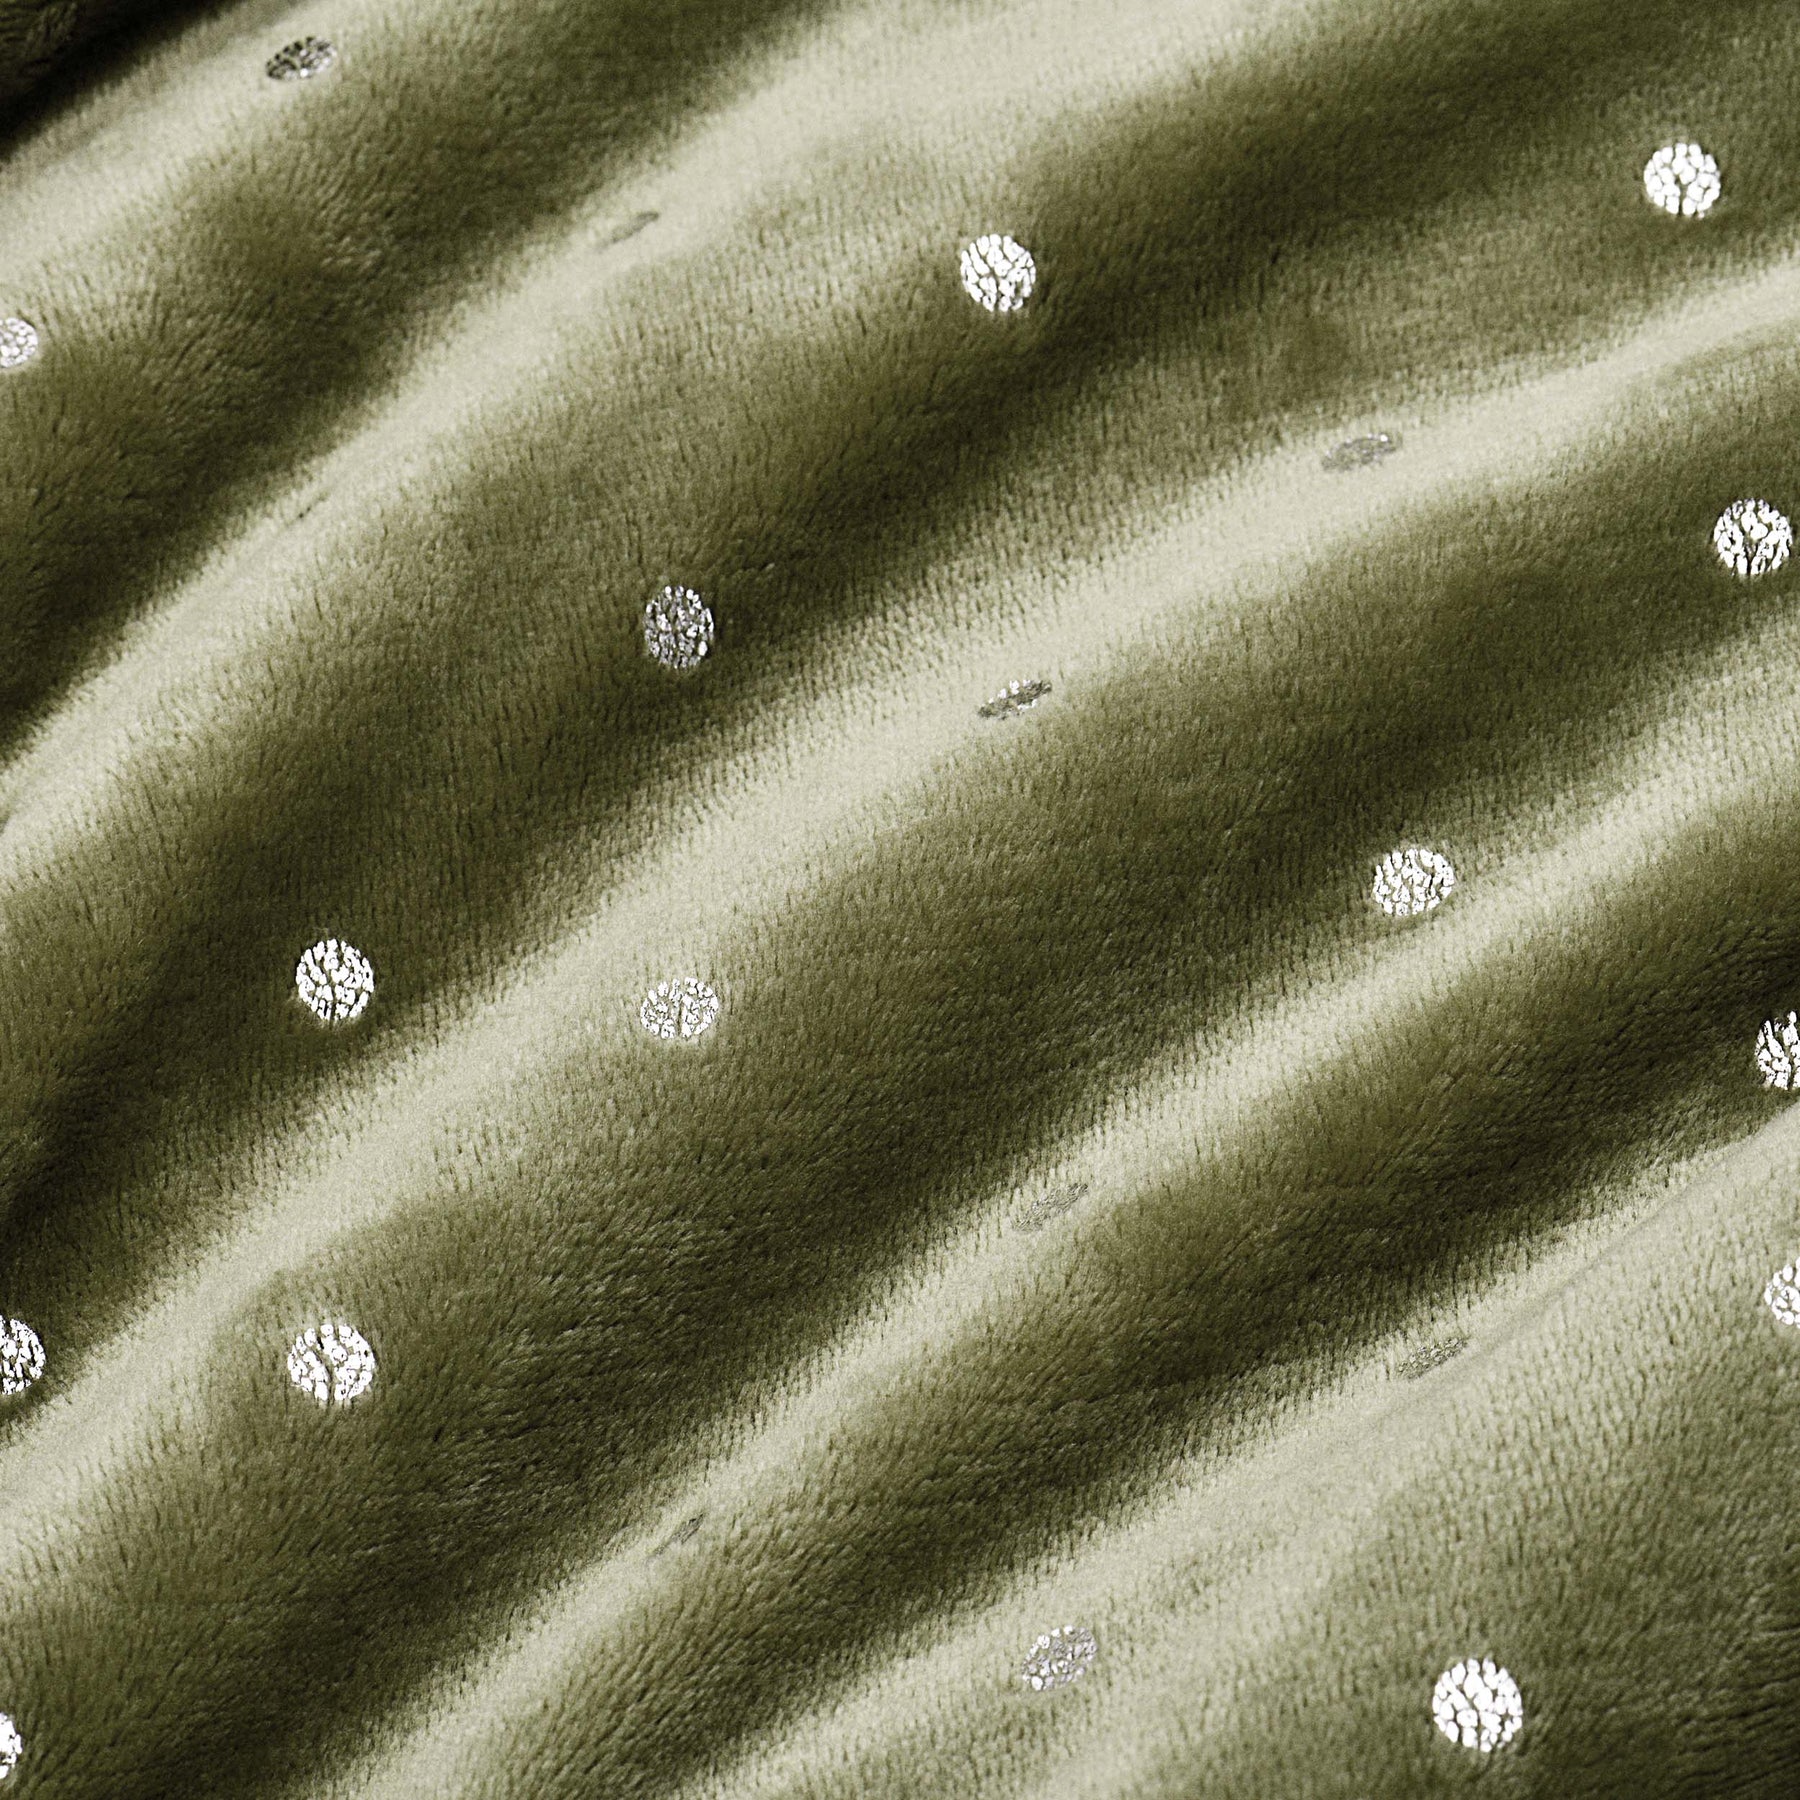 Fleece Plush Medium Weight Fluffy Soft Decorative Blanket Or Throw - Sage